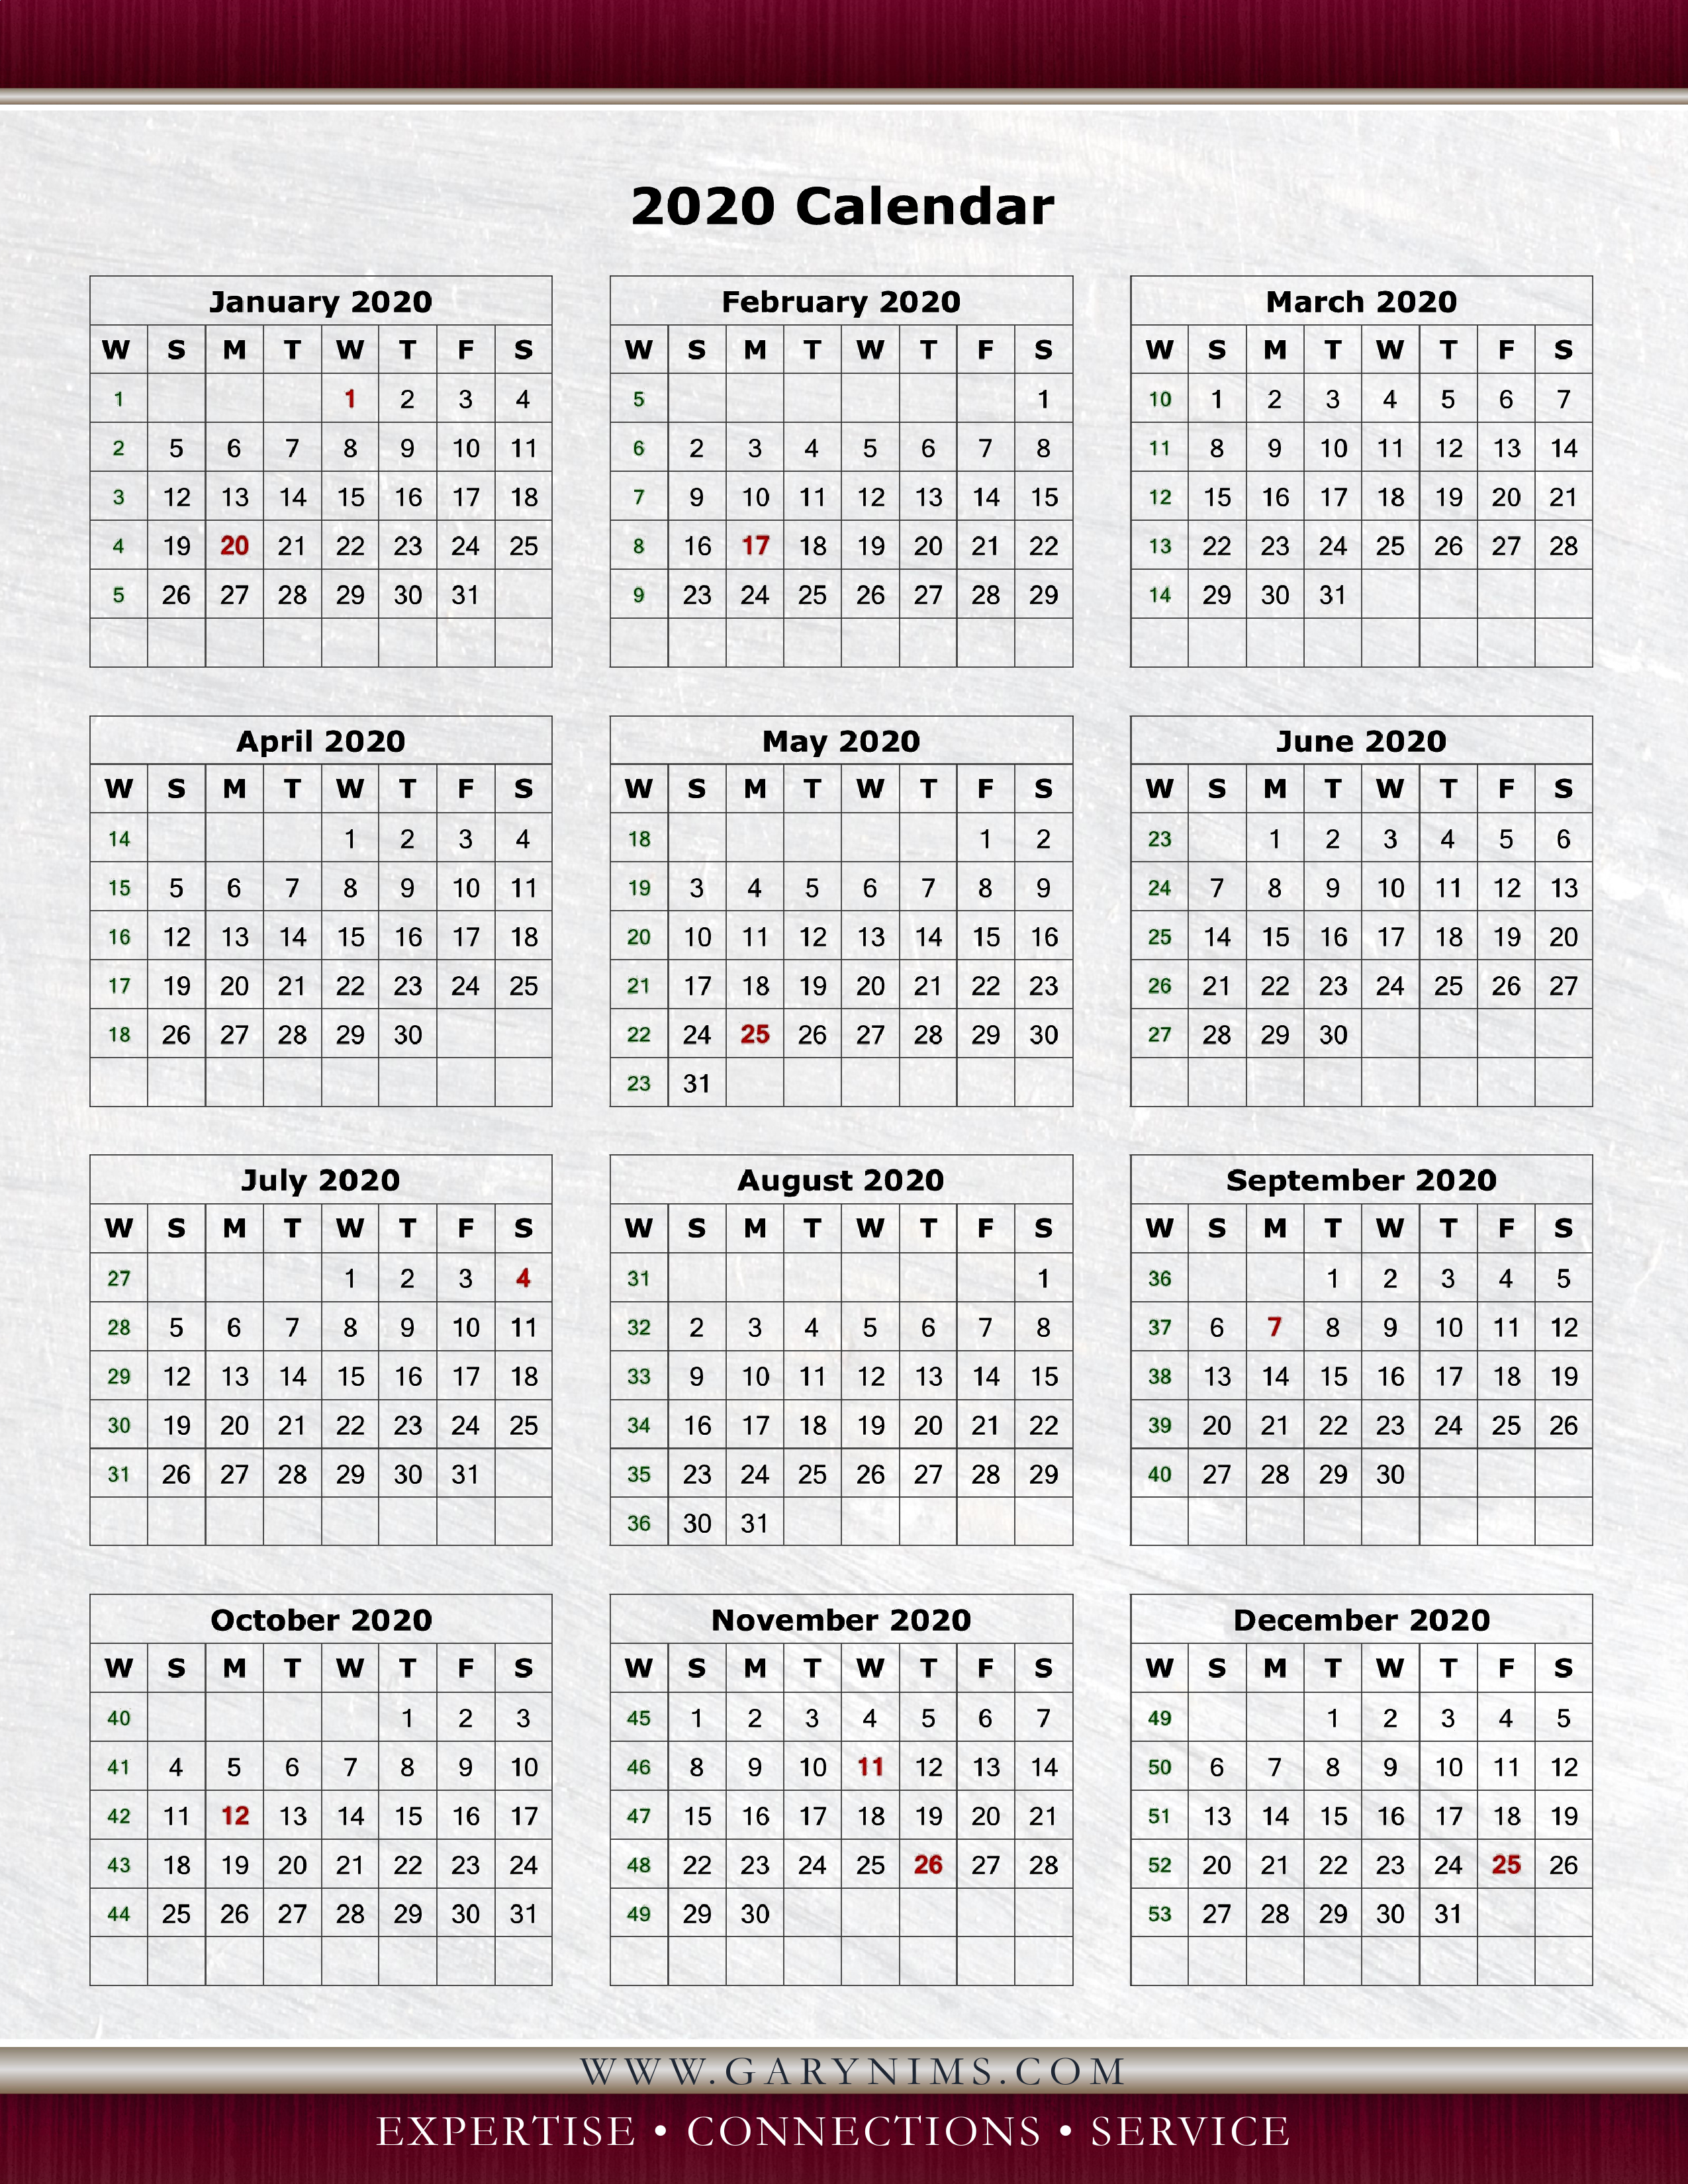 Sellers Packet Presentation   2020 Calendar